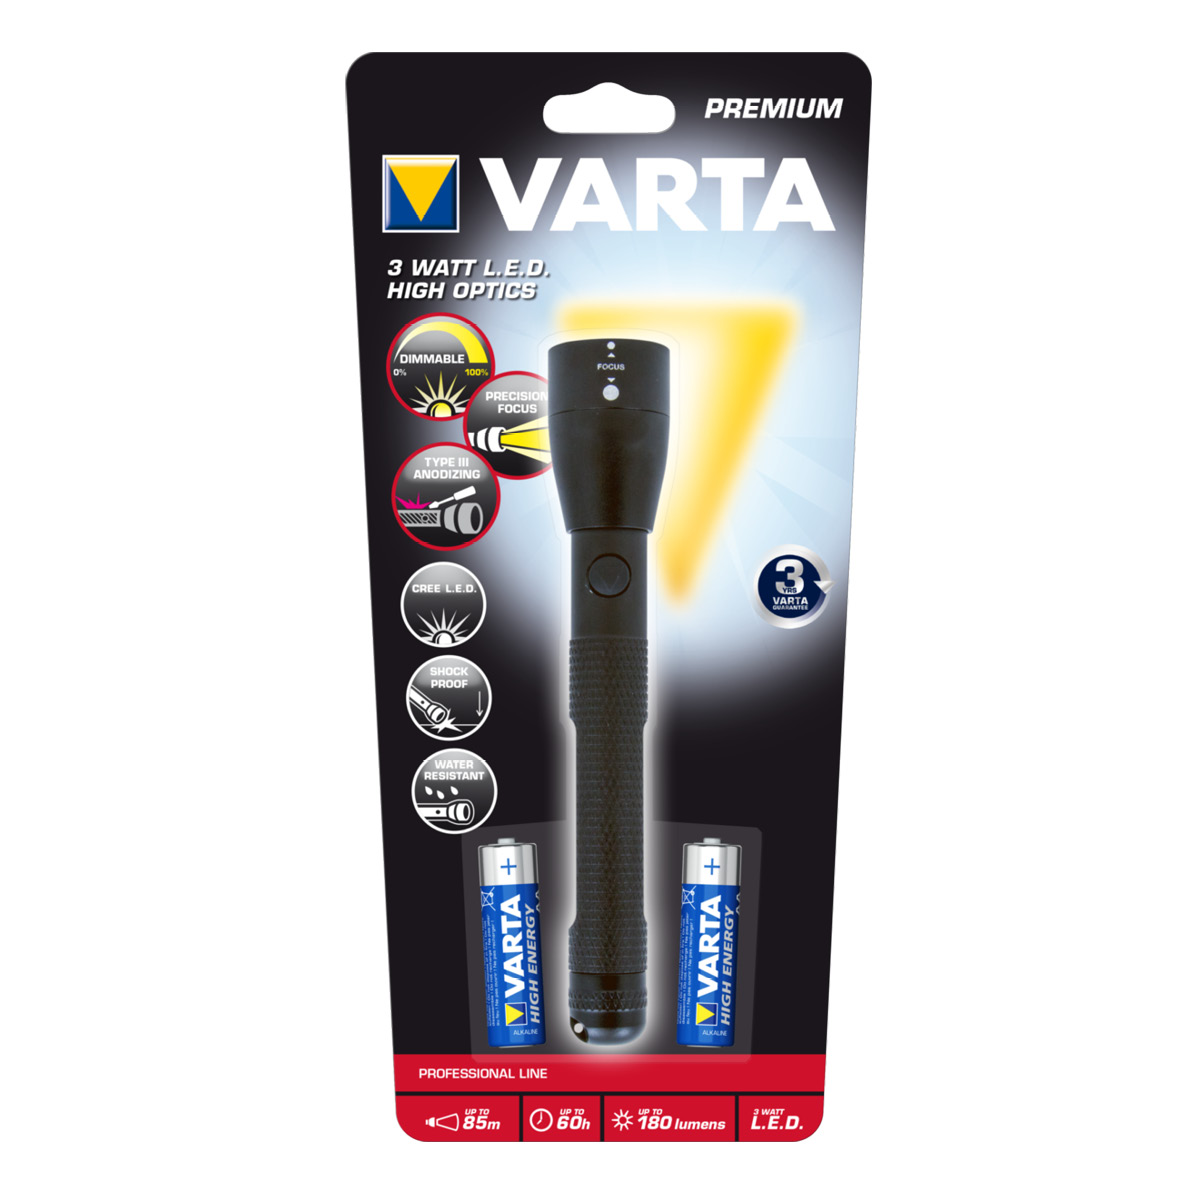 Varta High Optics Light 3W LED Taschenlampe